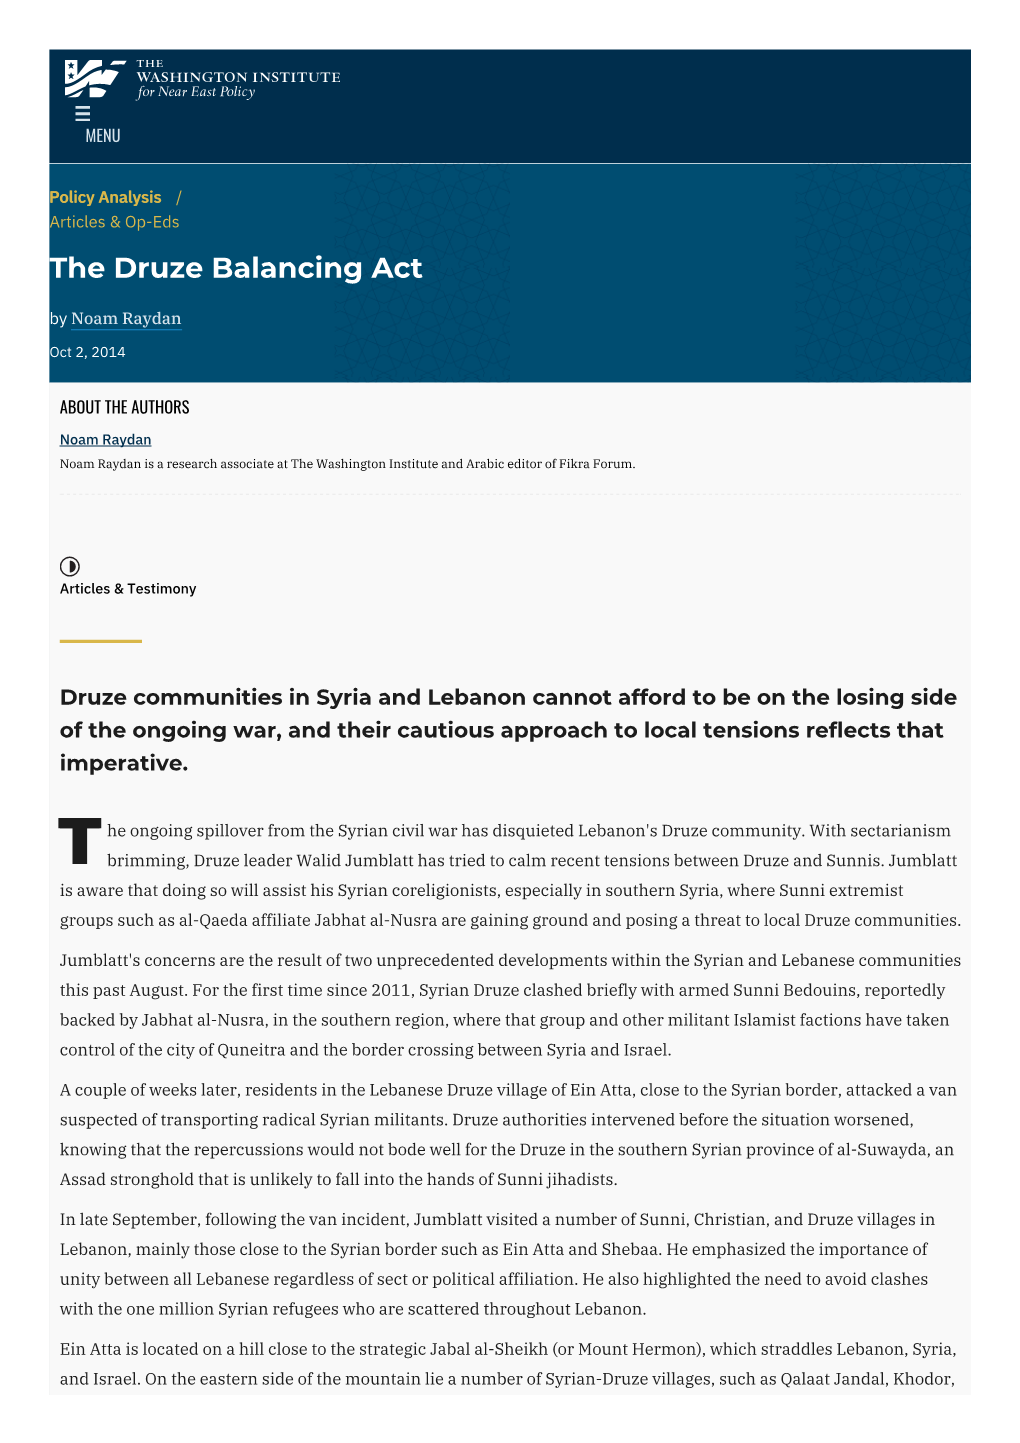 The Druze Balancing Act | the Washington Institute